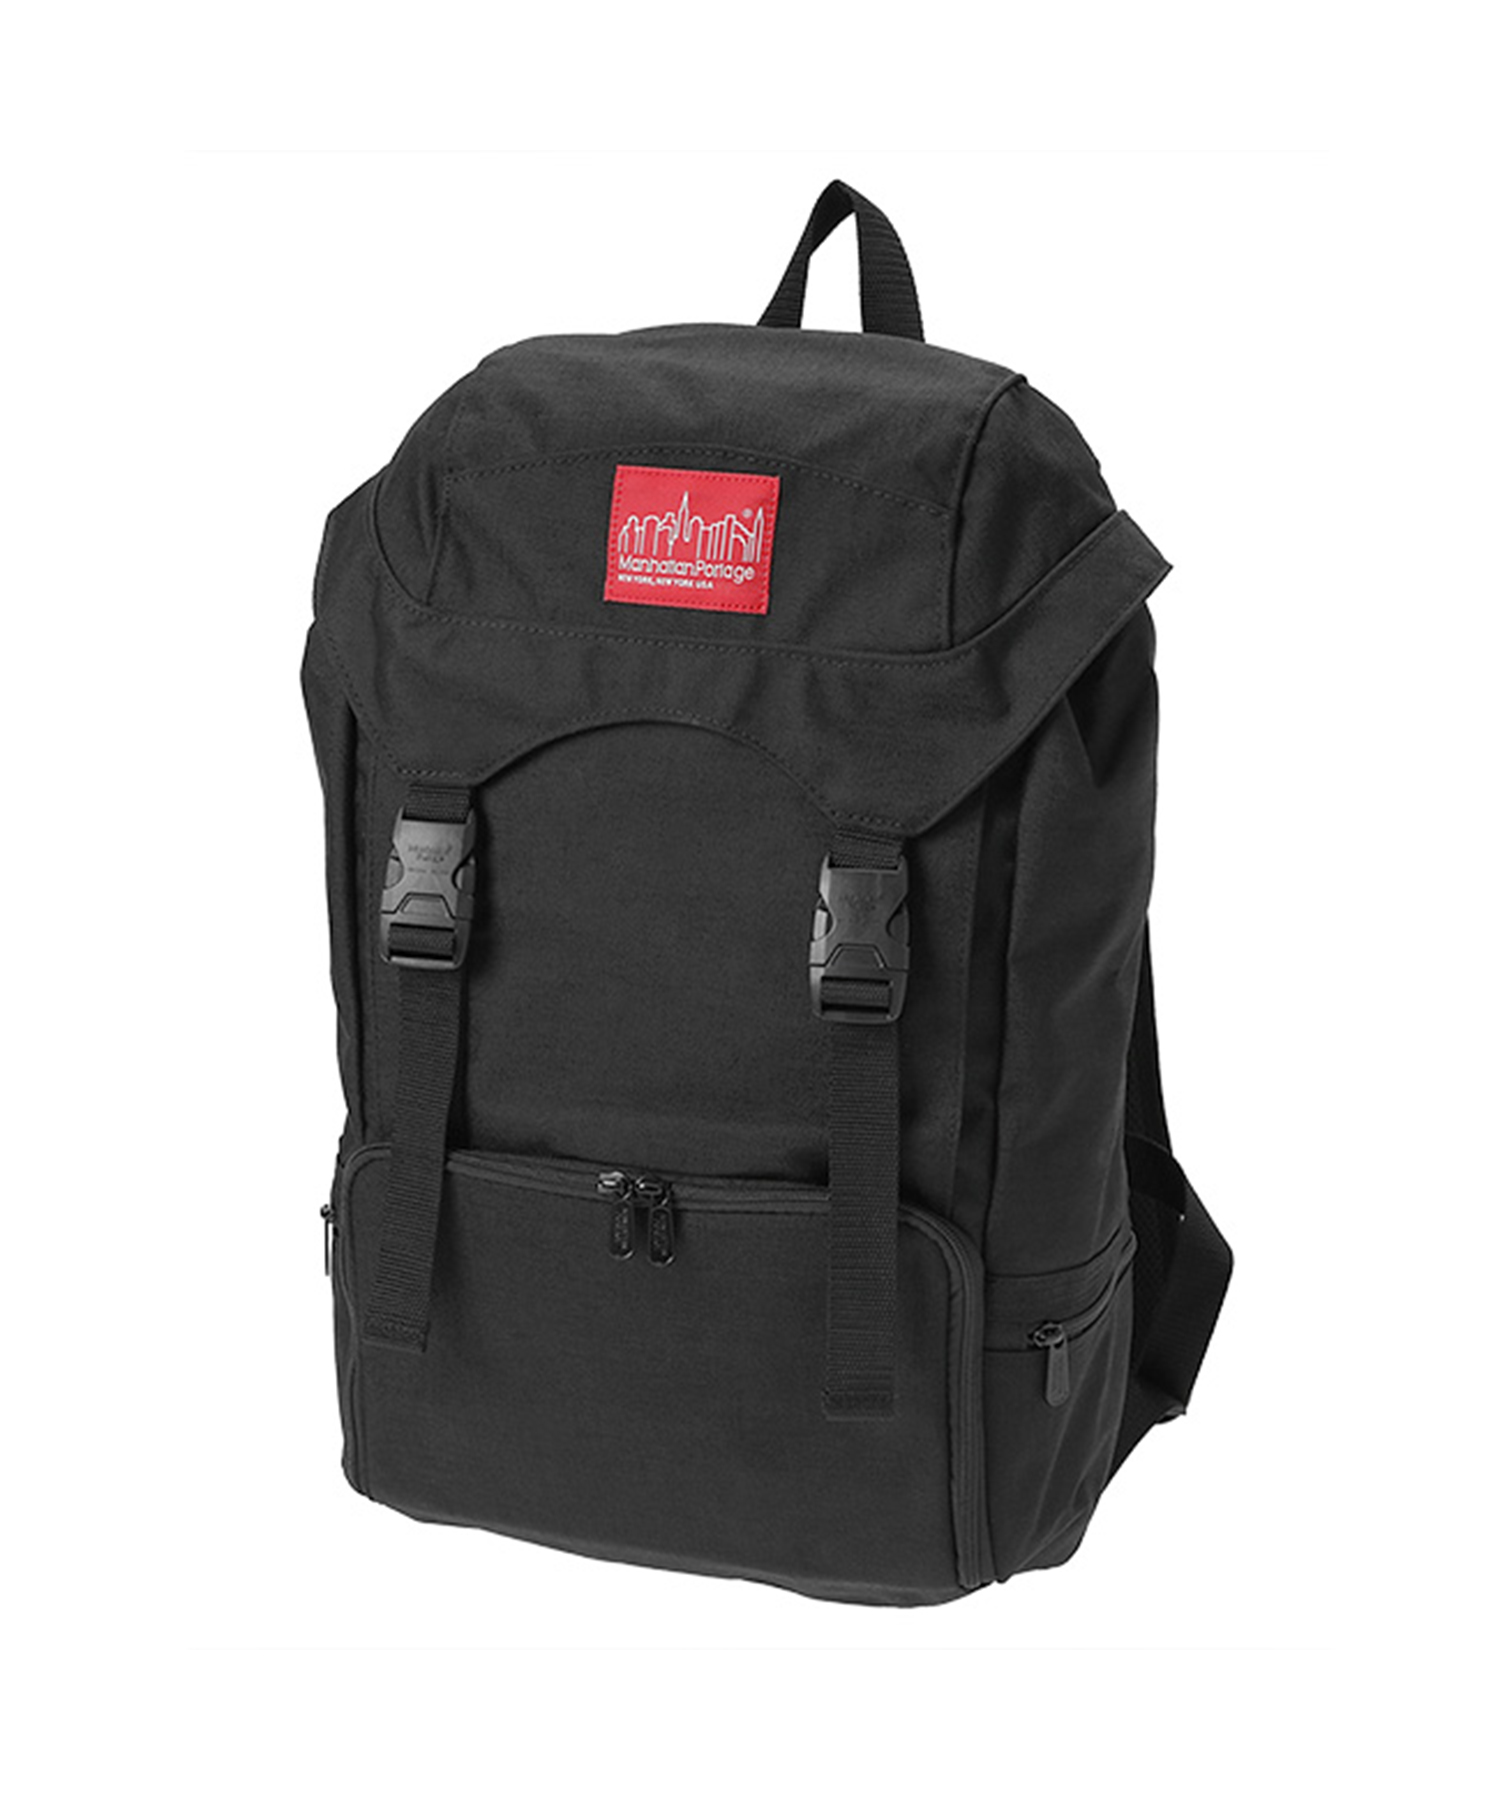 Hiker Backpack 保証 Manhattan マンハッタン ポーテージ Portage 本店